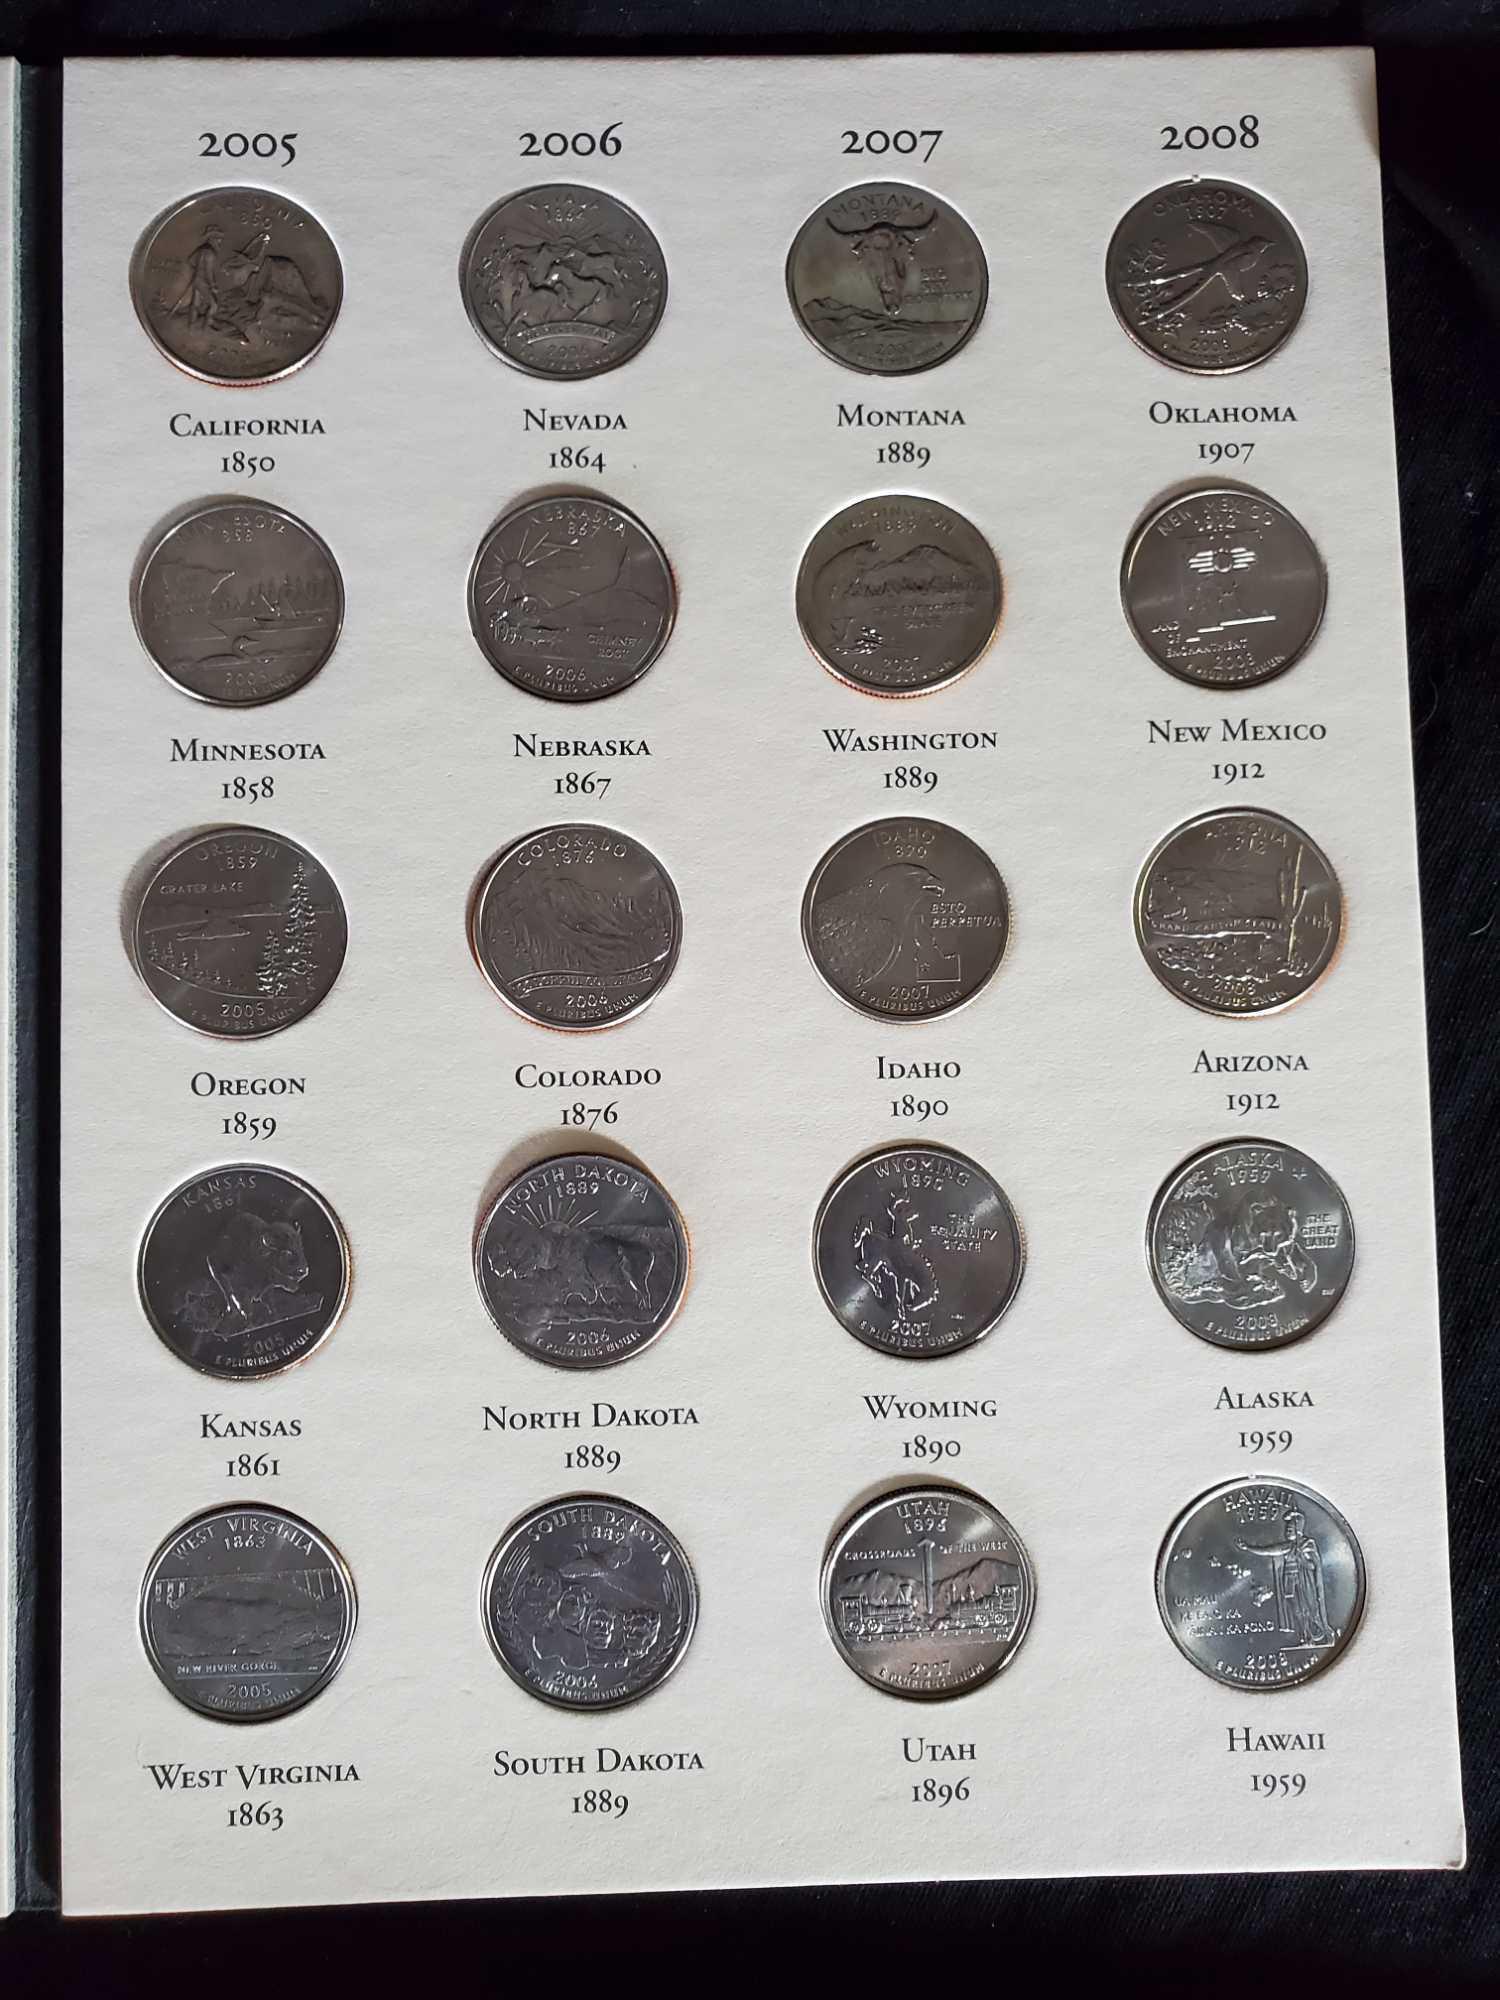 The 50 State Commemorative Quarter Collection, complete PLUS